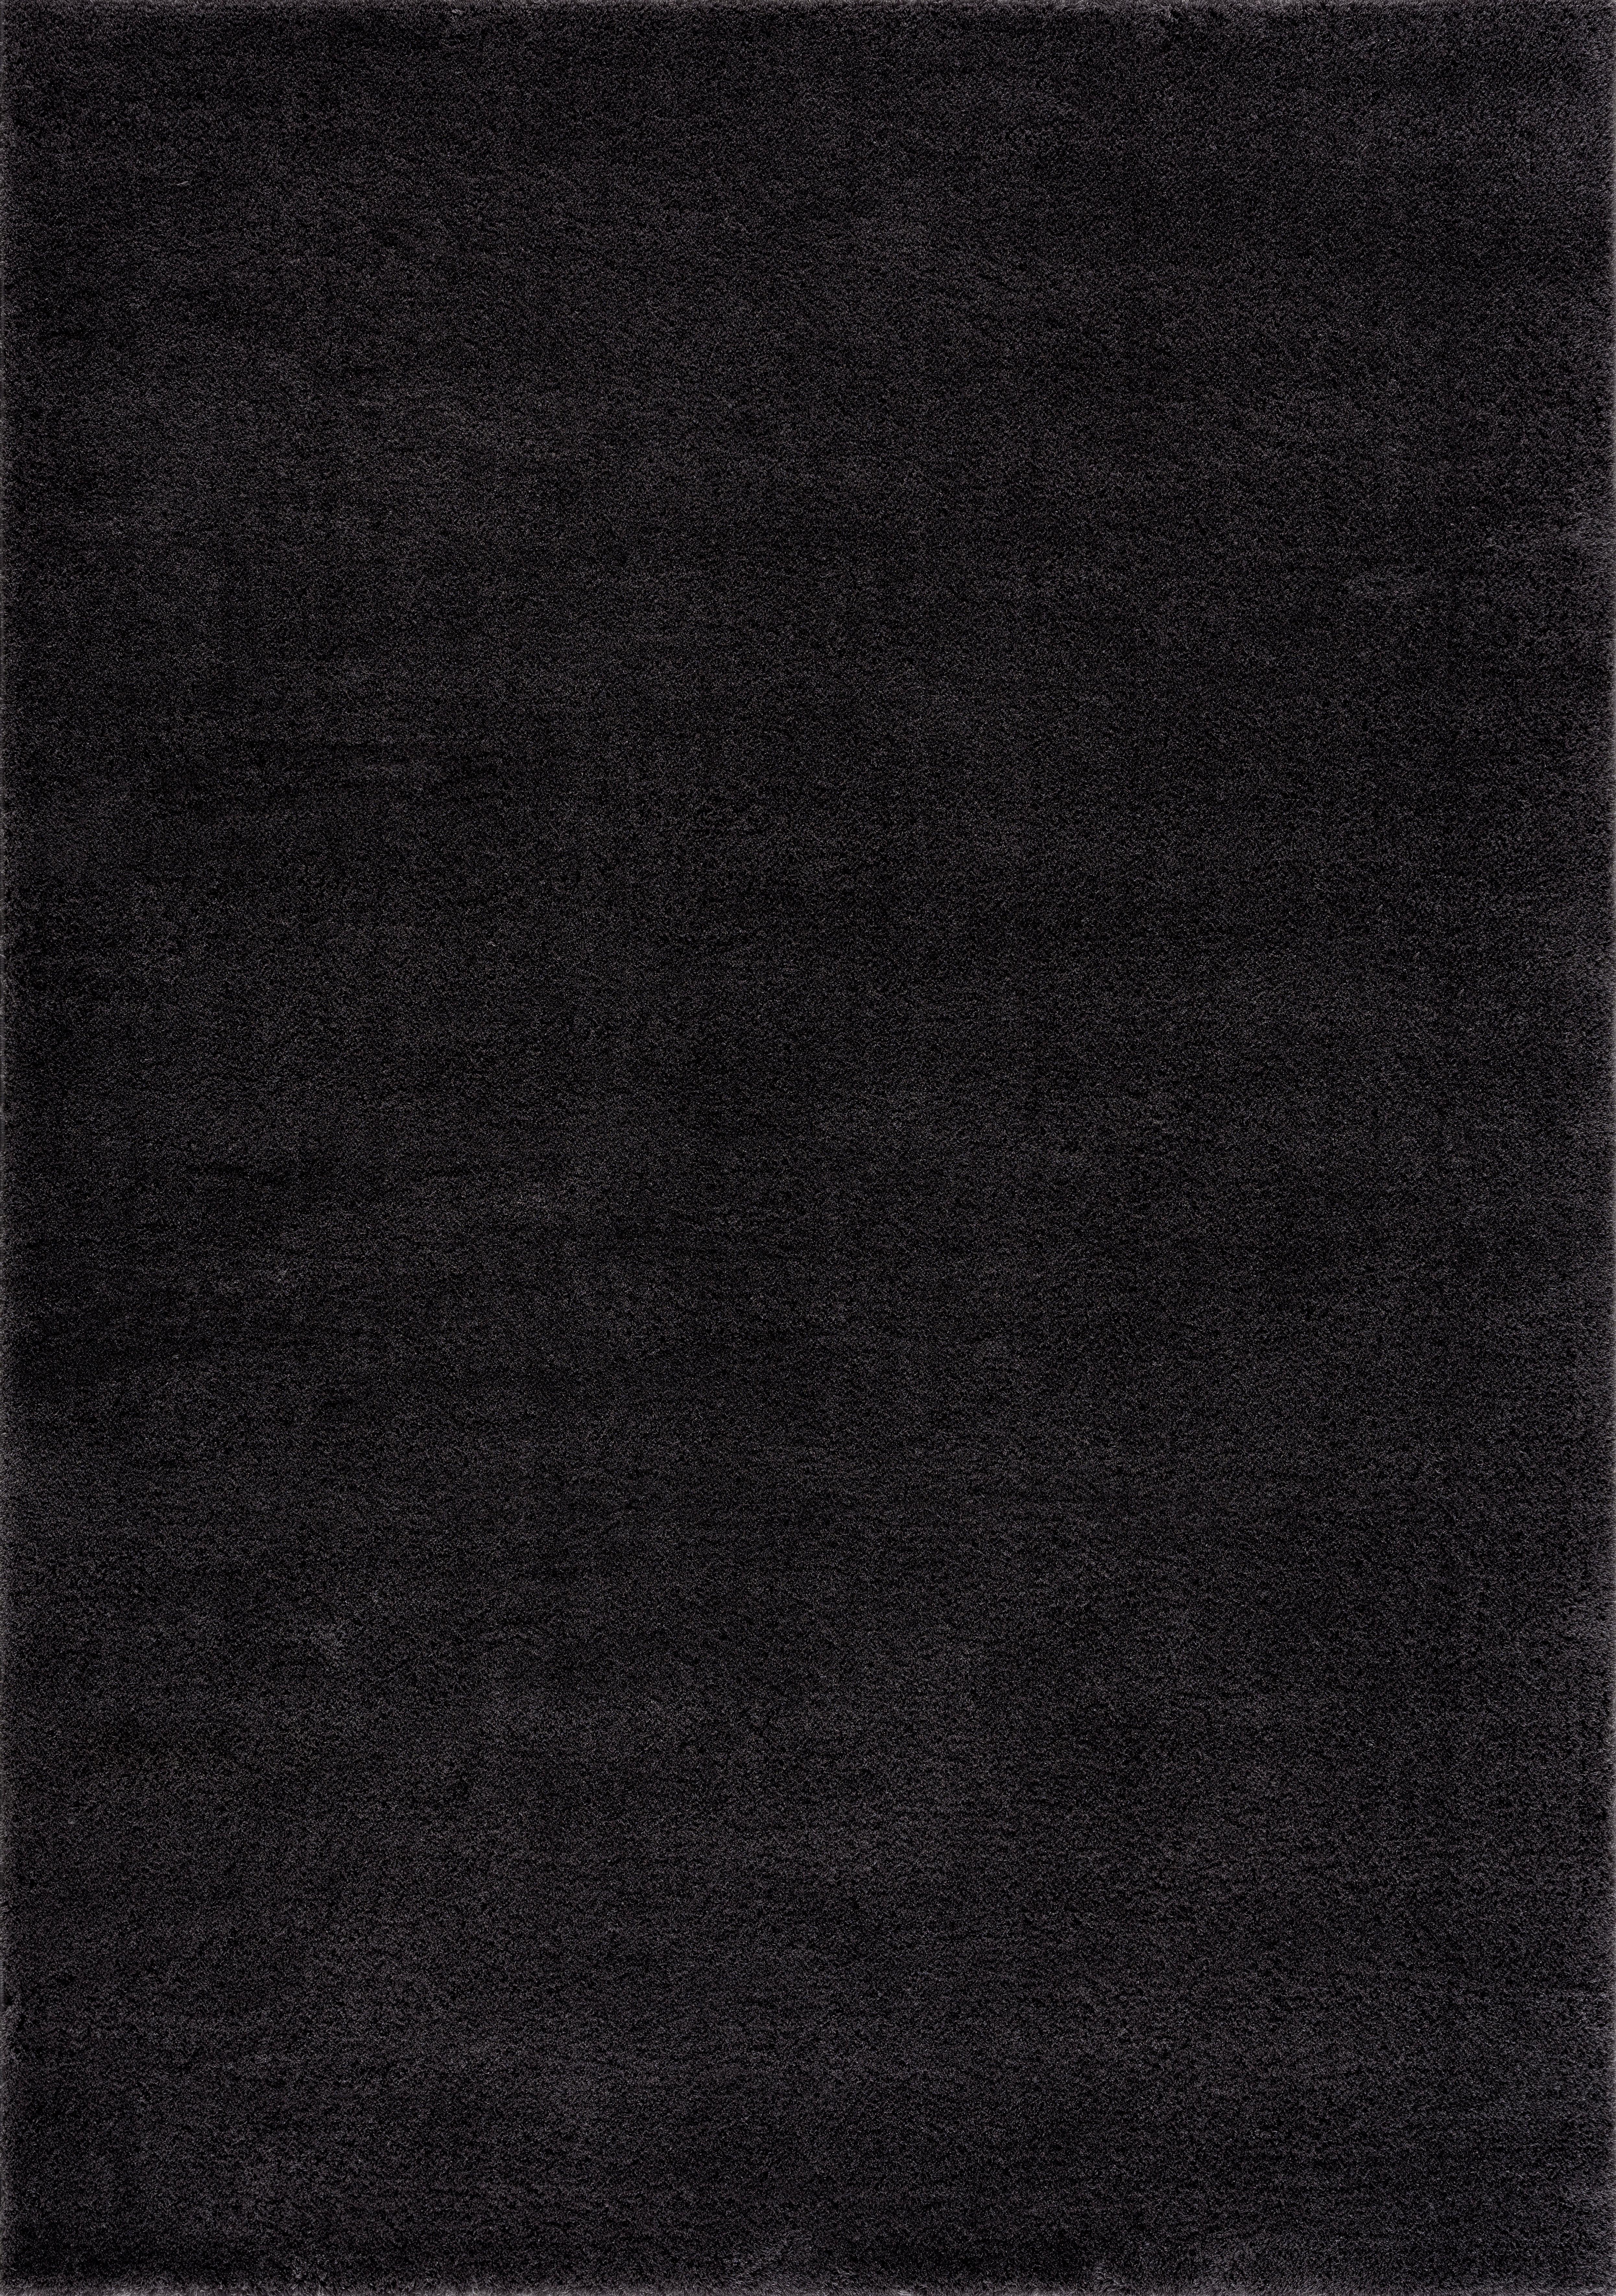 Shaggy Stefan 2 in Anthrazit ca. 120x170cm - Anthrazit, MODERN, Textil (120/170cm) - Modern Living